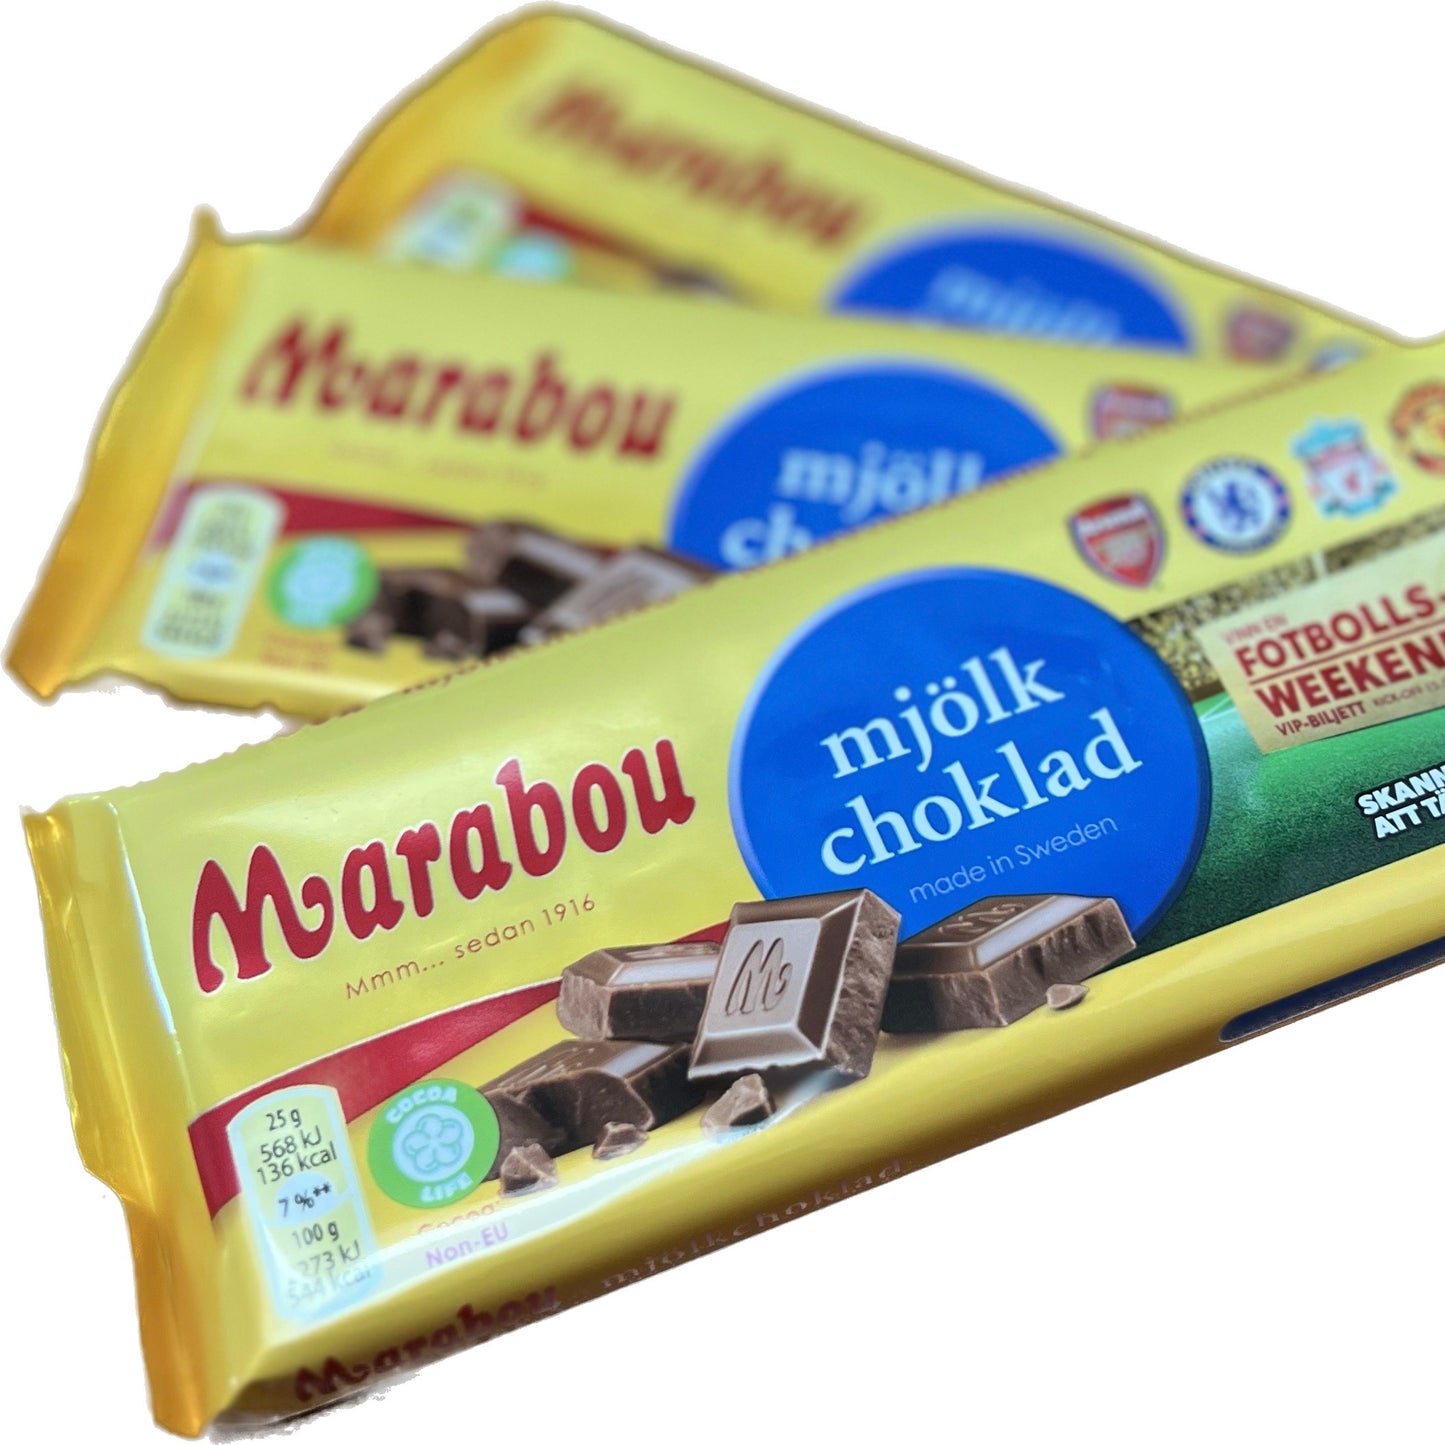 Marabou mjolkchoklad (Swedish Marabou milk chocolate)